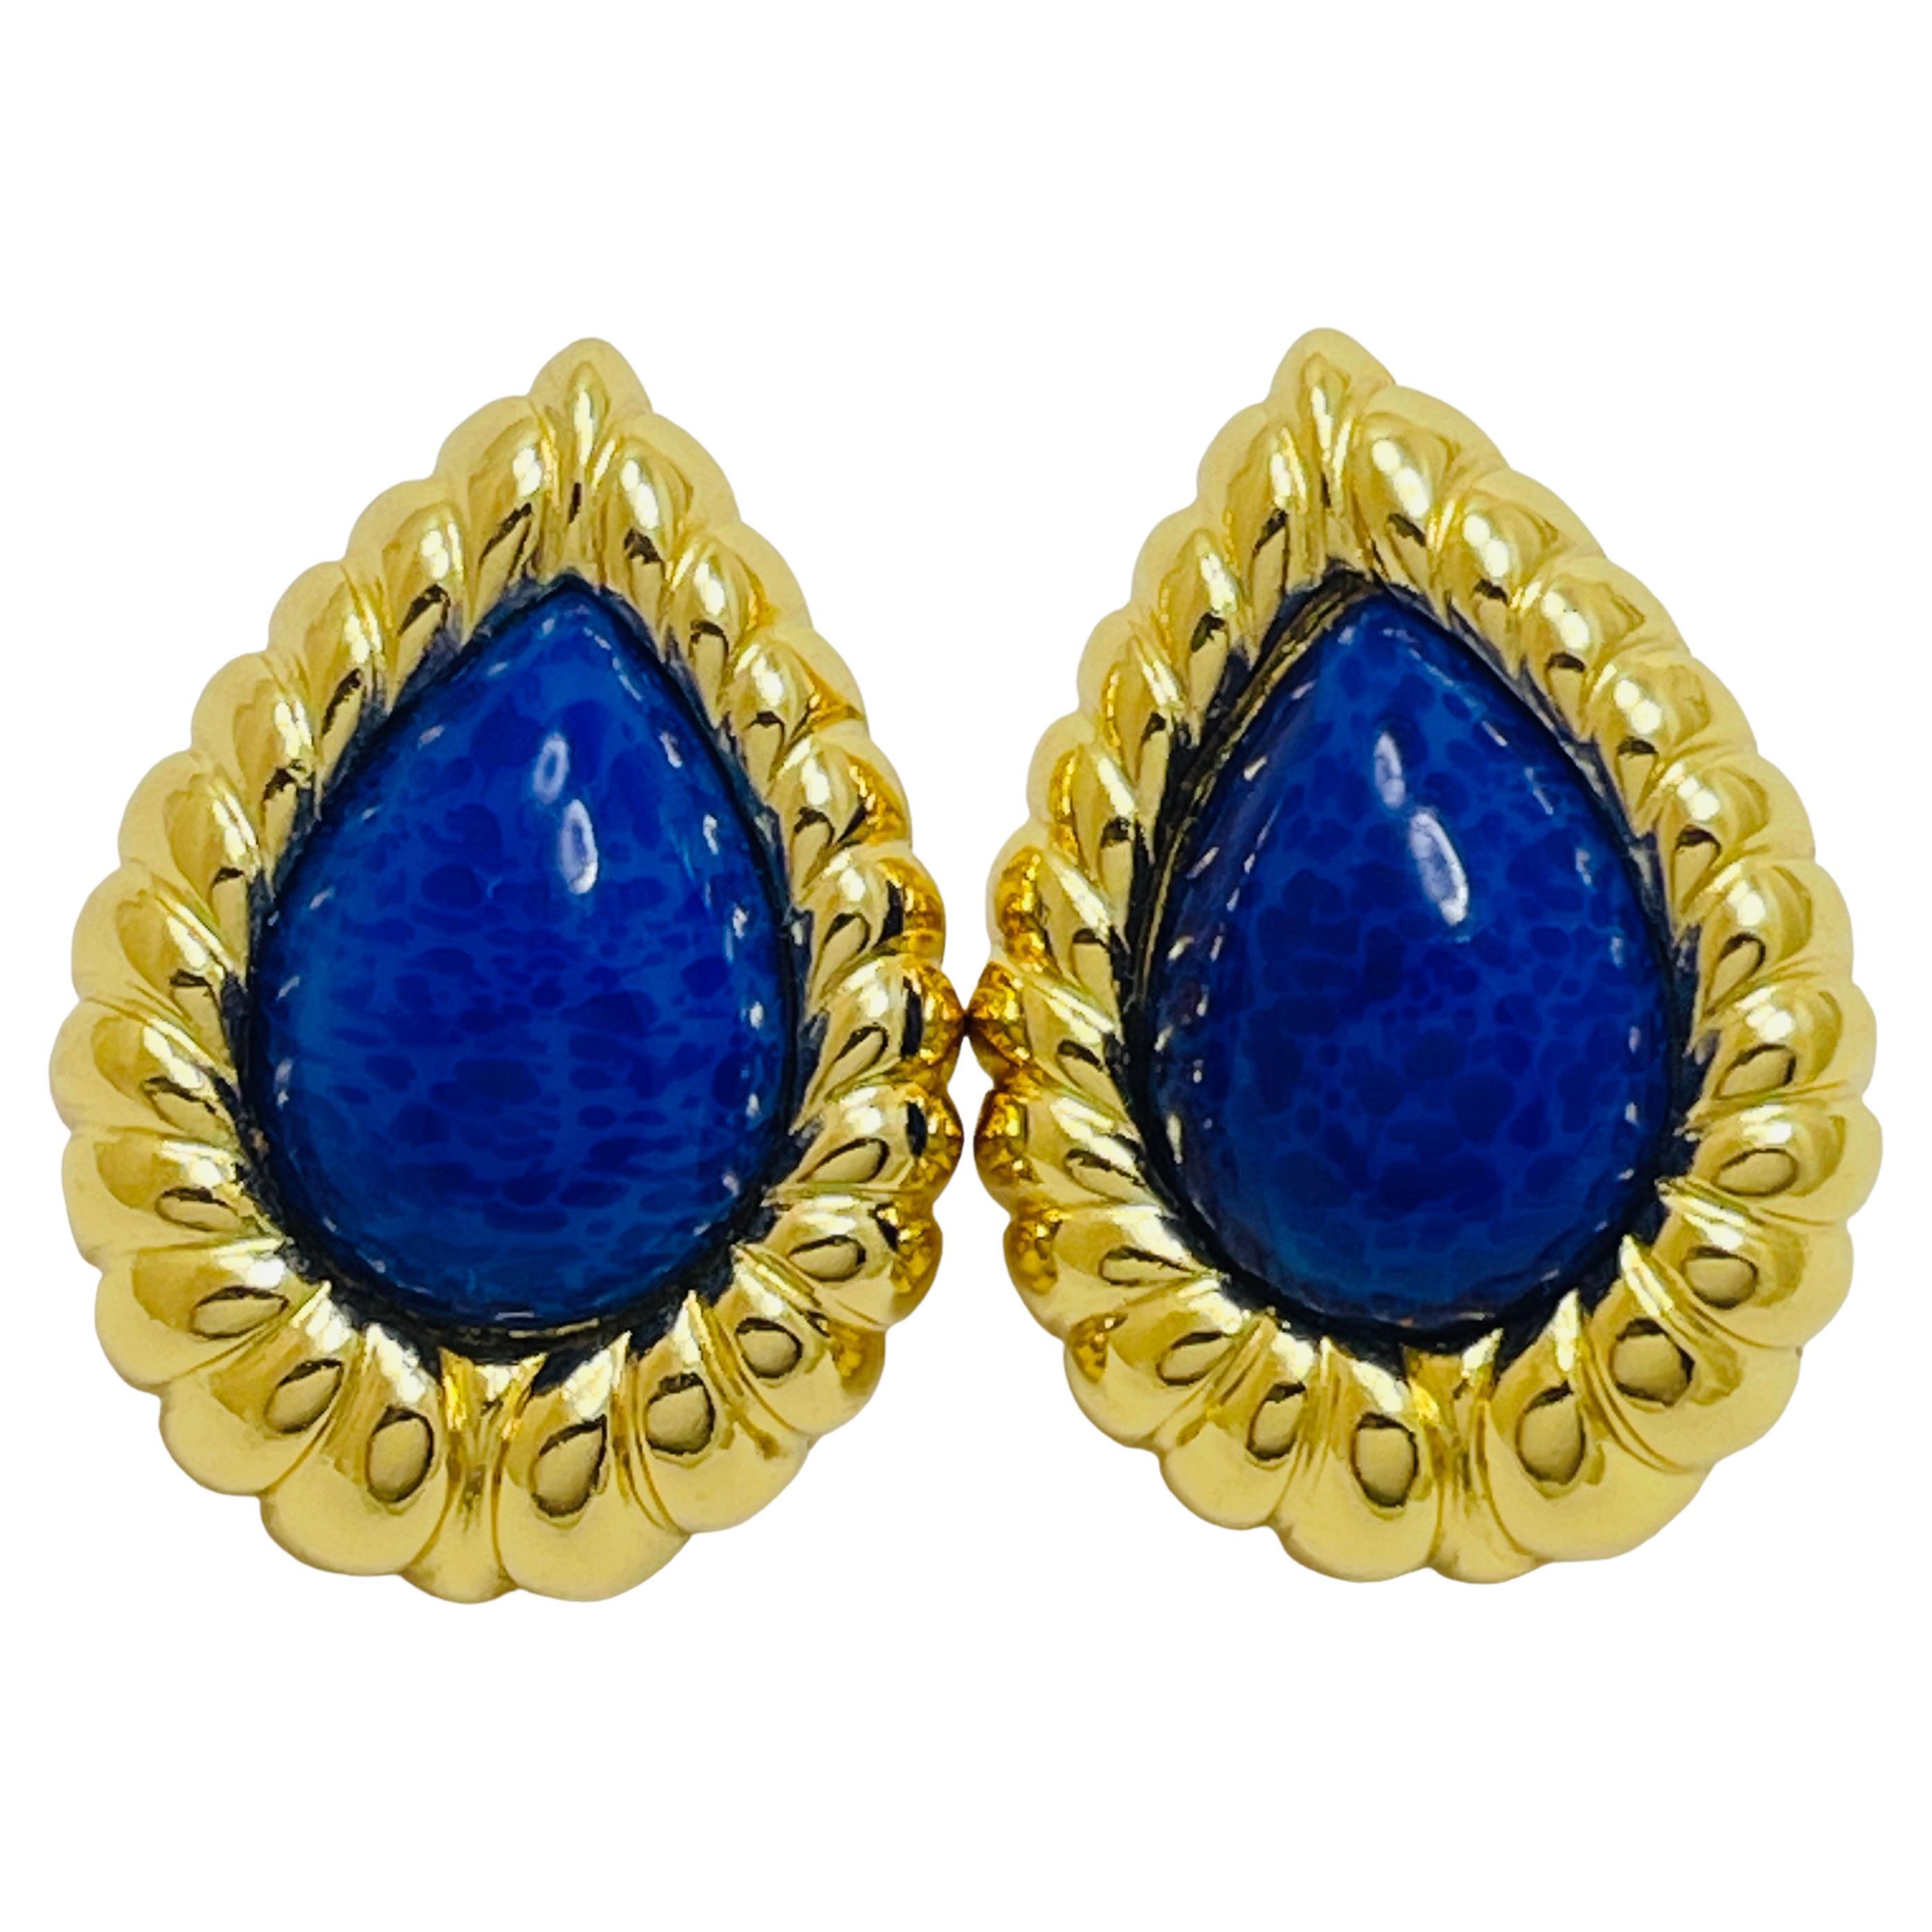 Vintage CHRISTIAN DIOR gold faux lapis designer runway earrings